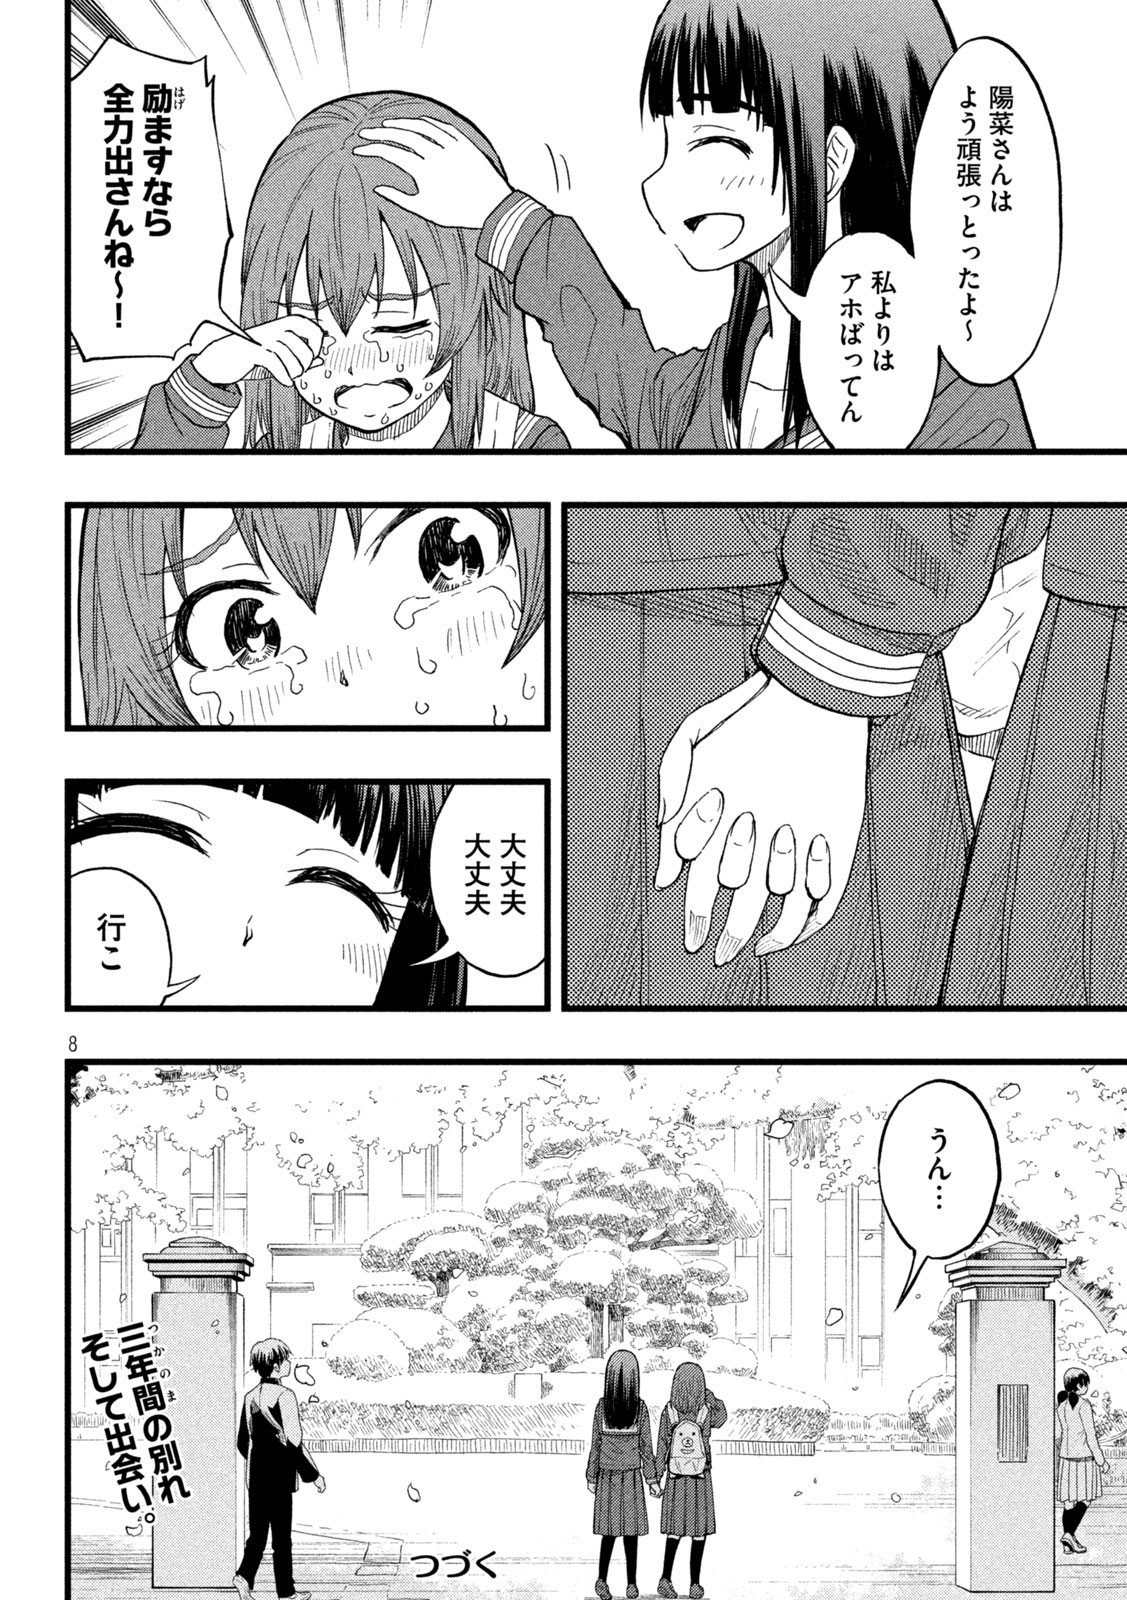 Koharu haru! - Chapter 91 - Page 4